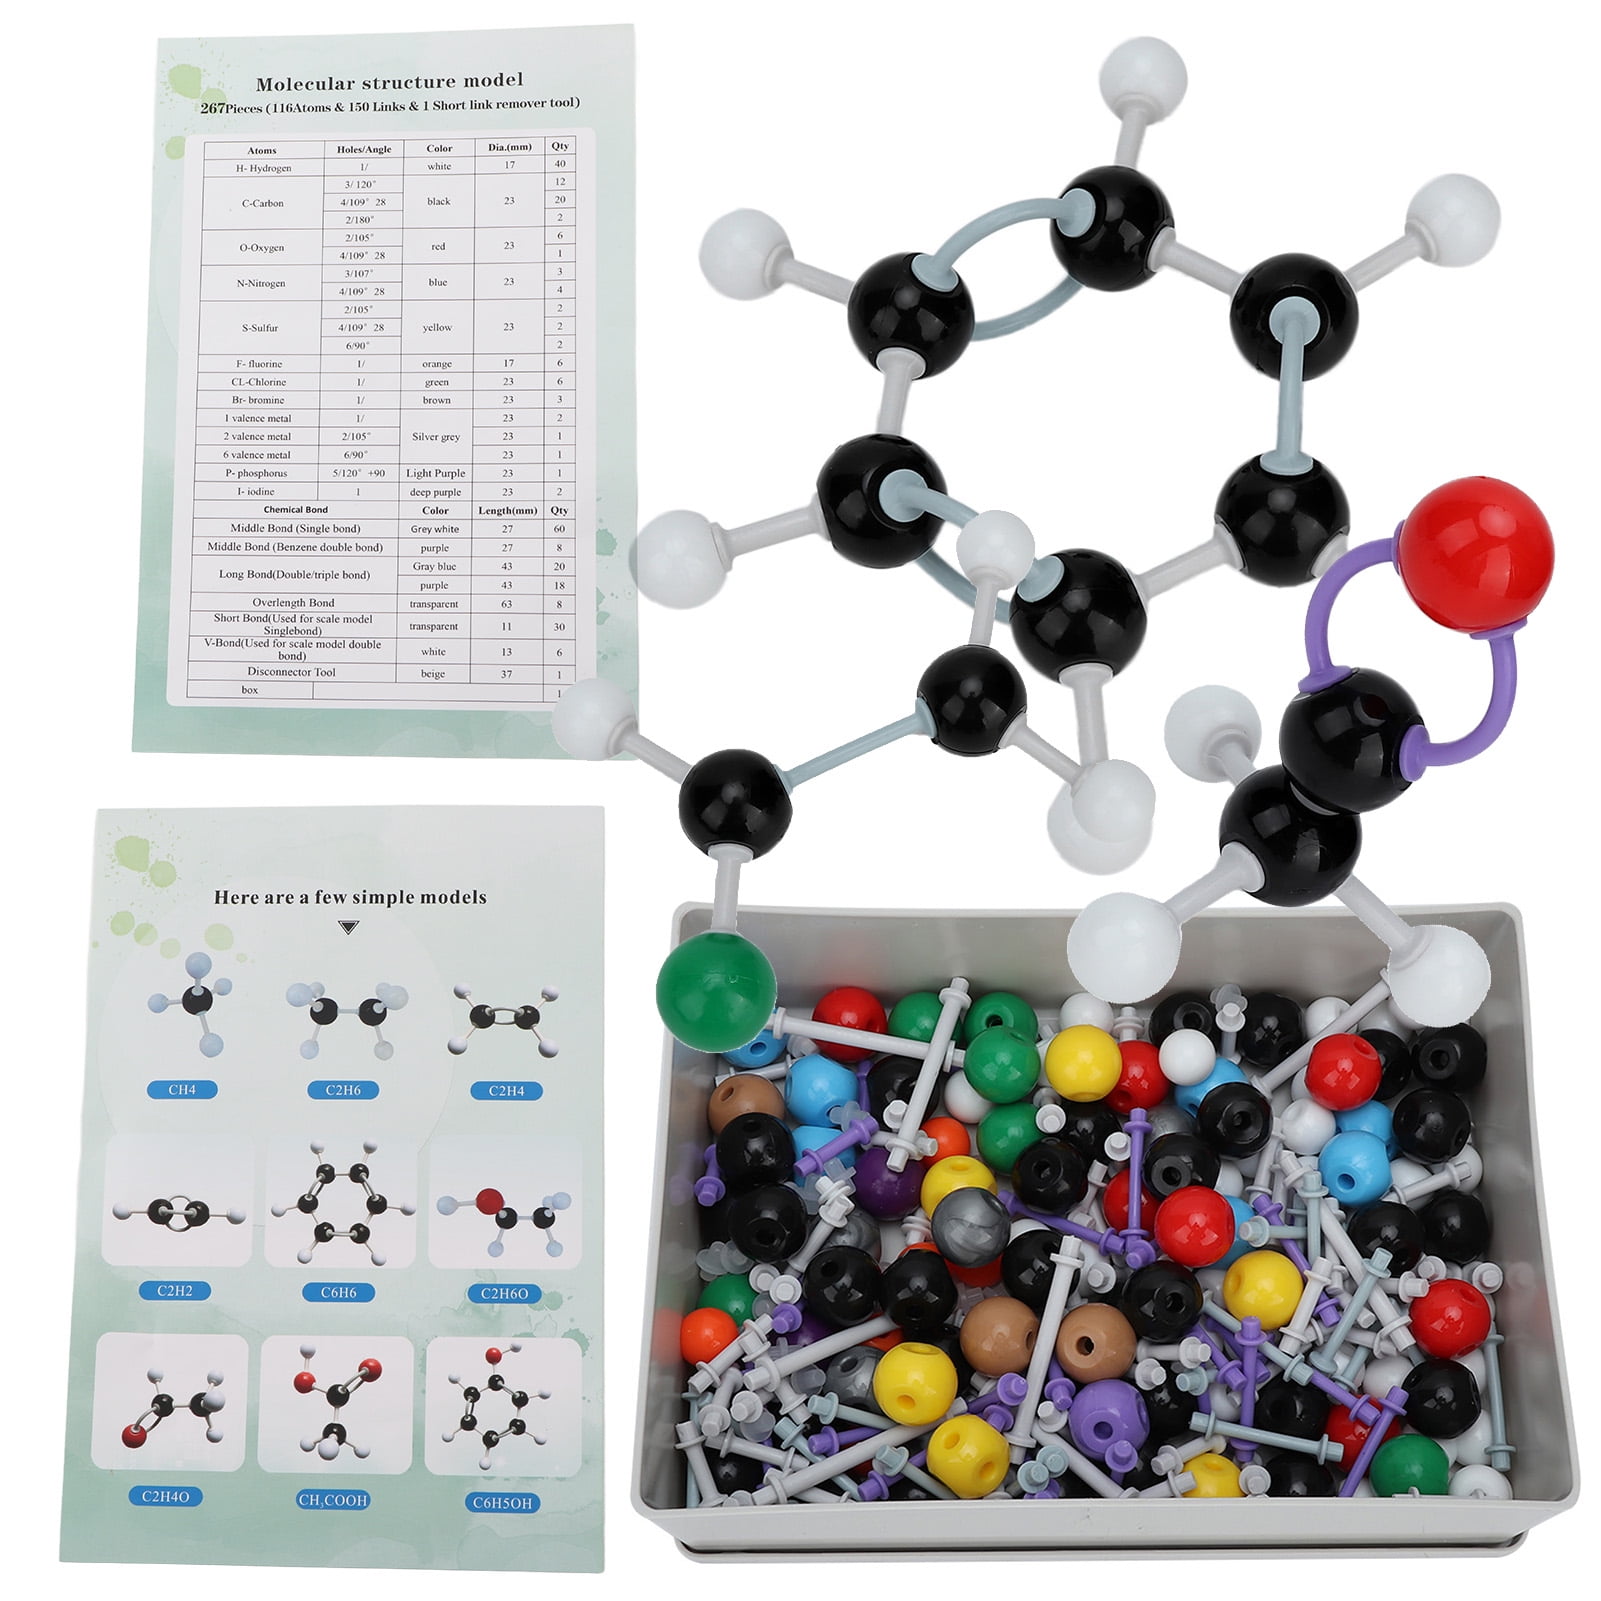 Abiertamente espiritual Anzai Organic Chemistry Model Kit, Chemistry Molecular Model Kit, Molecule  Modeling Kit, Labs Organic Chemistry Supplies Student/ Teacher Supplies For  Teaching For Building Molecules - Walmart.com